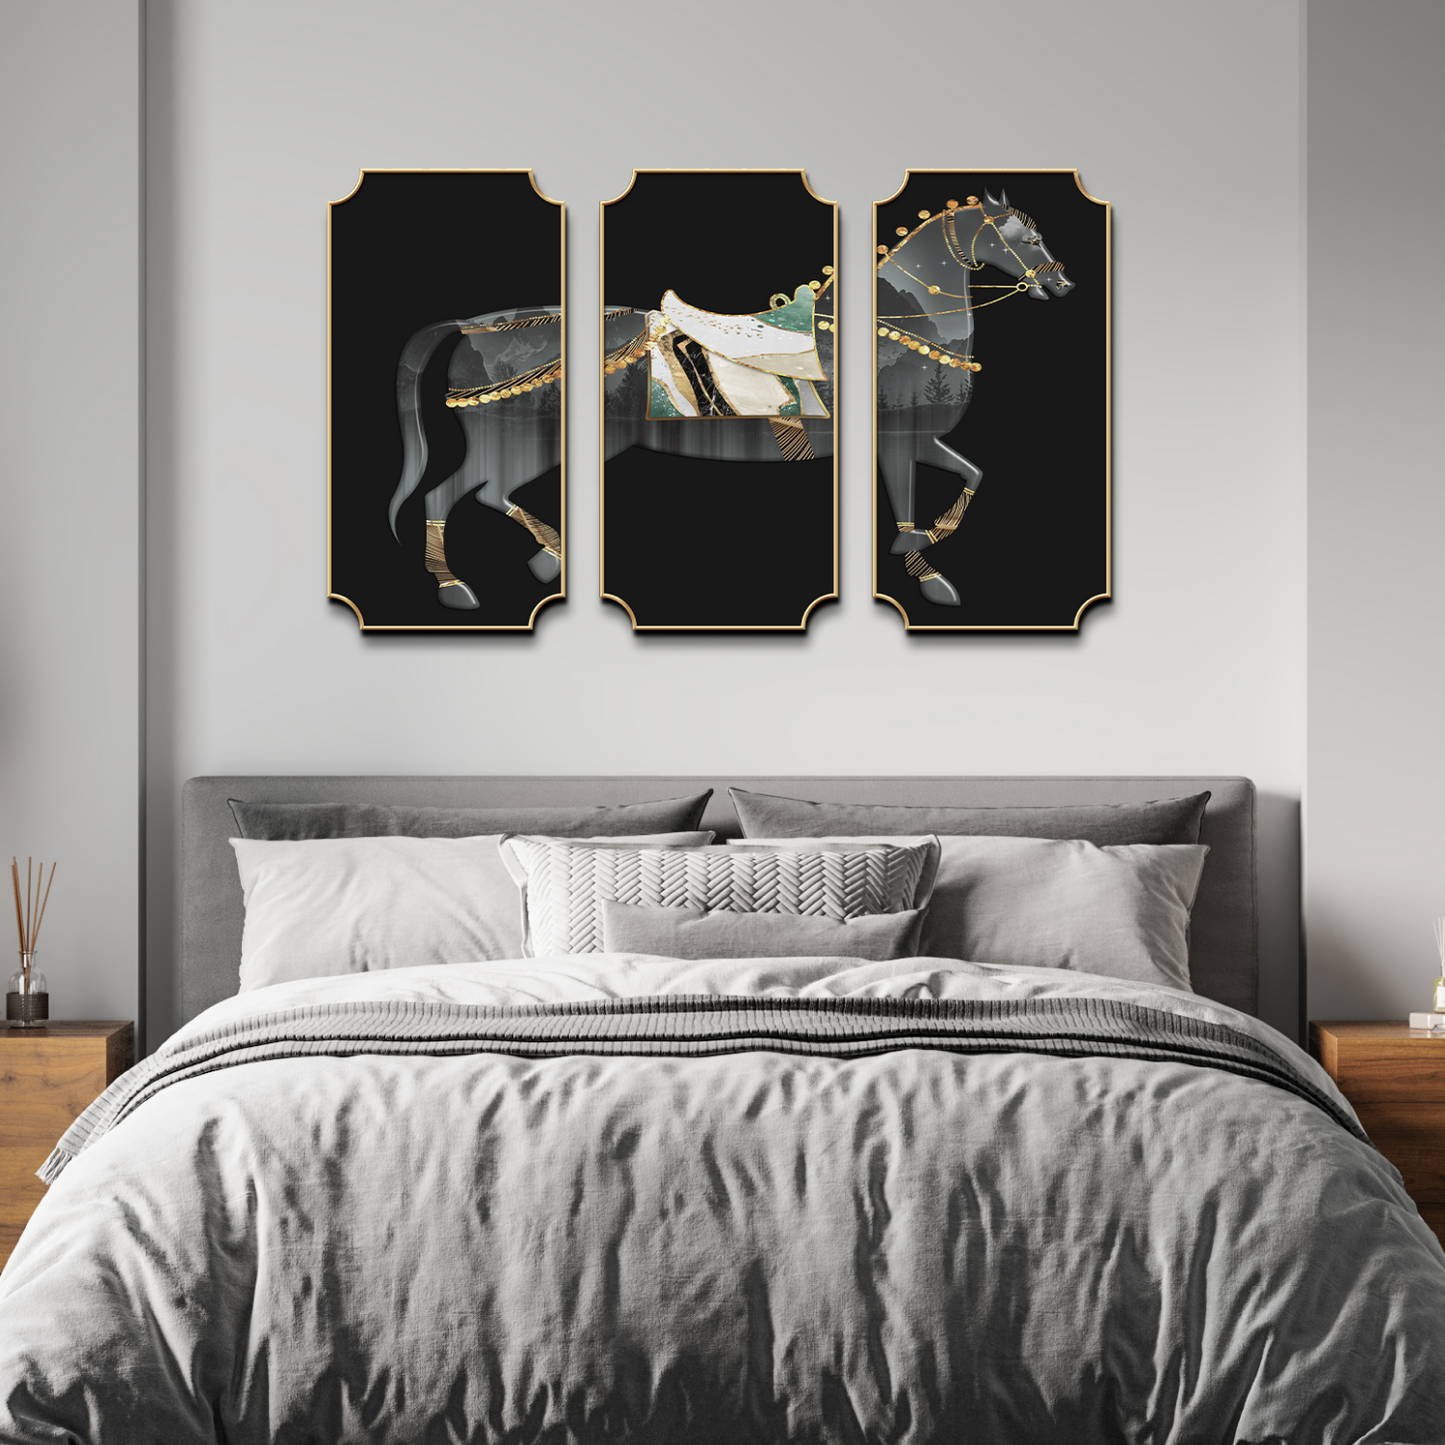 Set of 3 Horse Mural Wood Print Wall Art